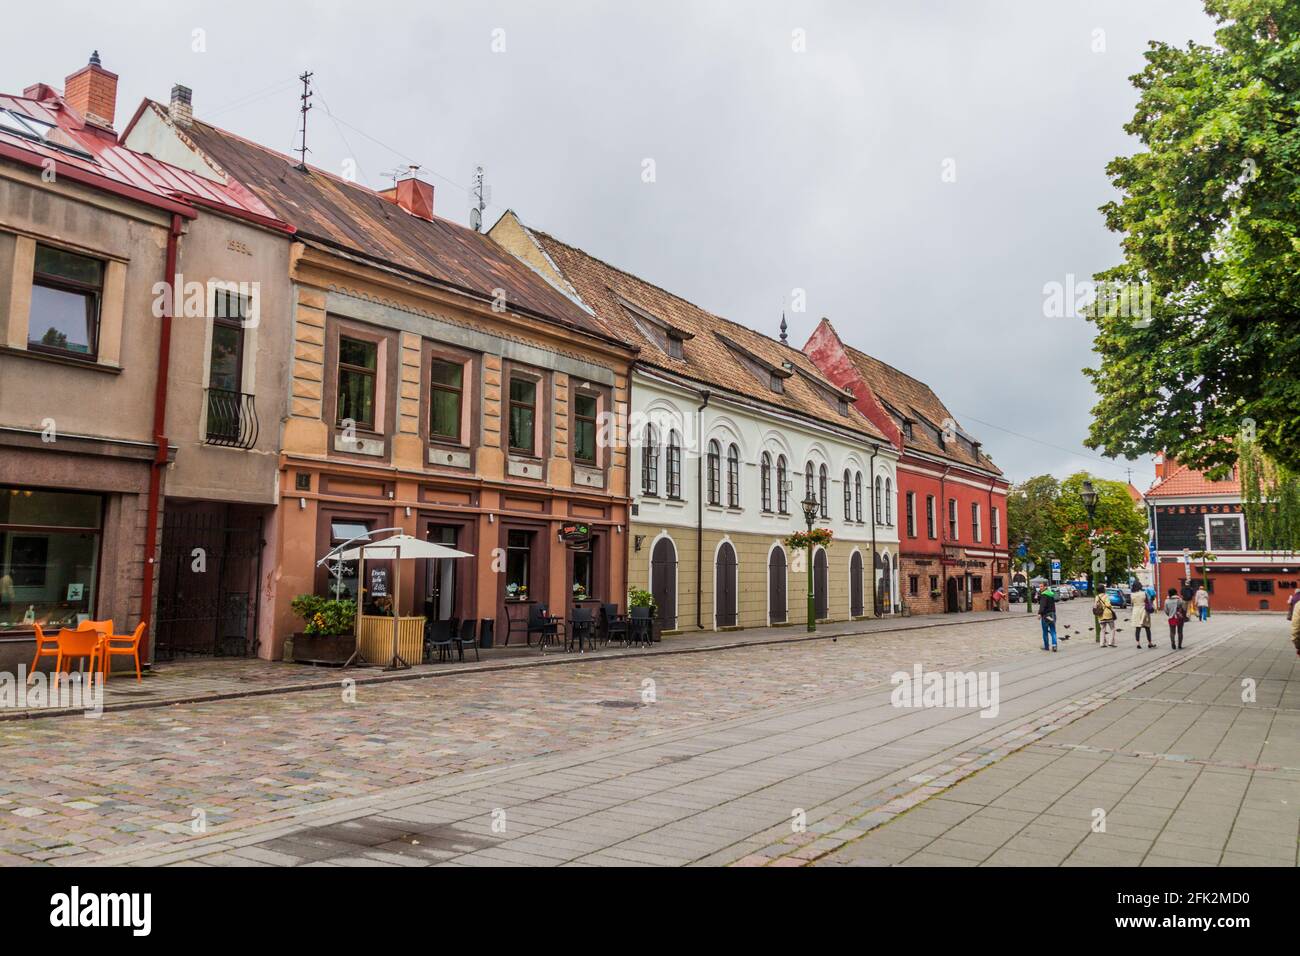 KAUNAS, LITHUANIA - AUGUST 17, 2016: View of Vilniaus gatve street in Kaunas, Lithuania Stock Photo